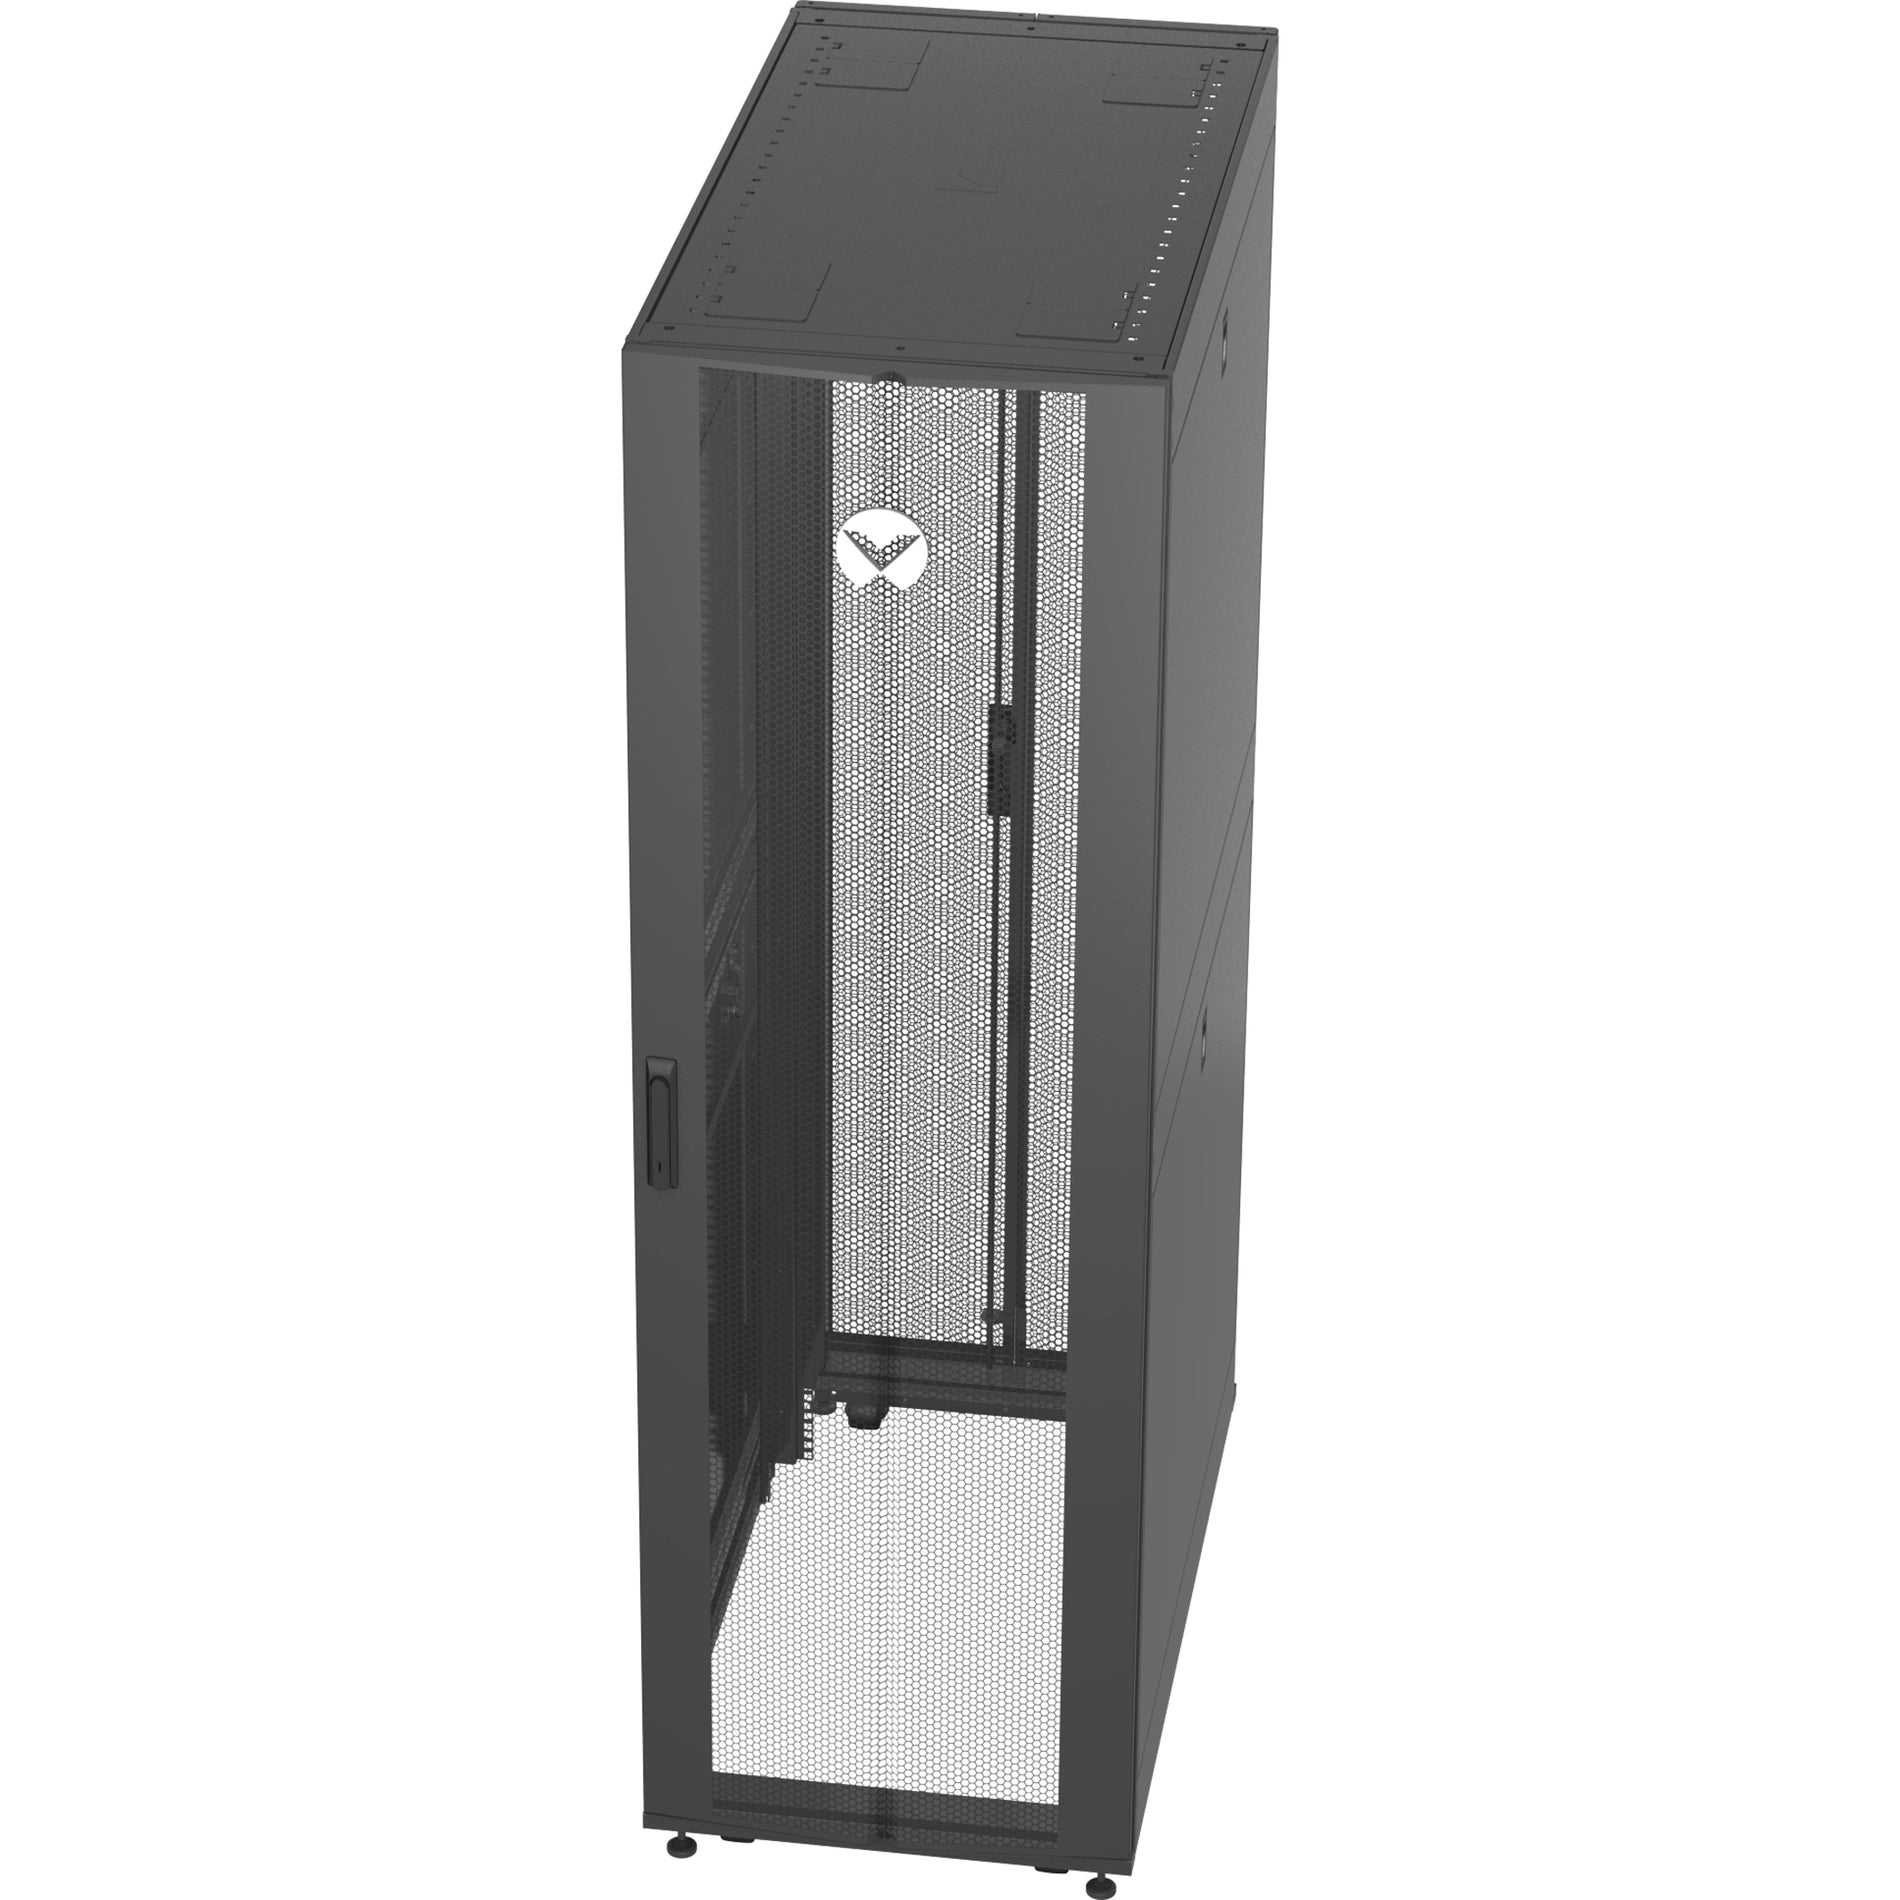 VERTIV VR3100TAA VR - 42U TAA Compliant Rack Cabinet, Patch Panel, Server, LAN Switch, Black